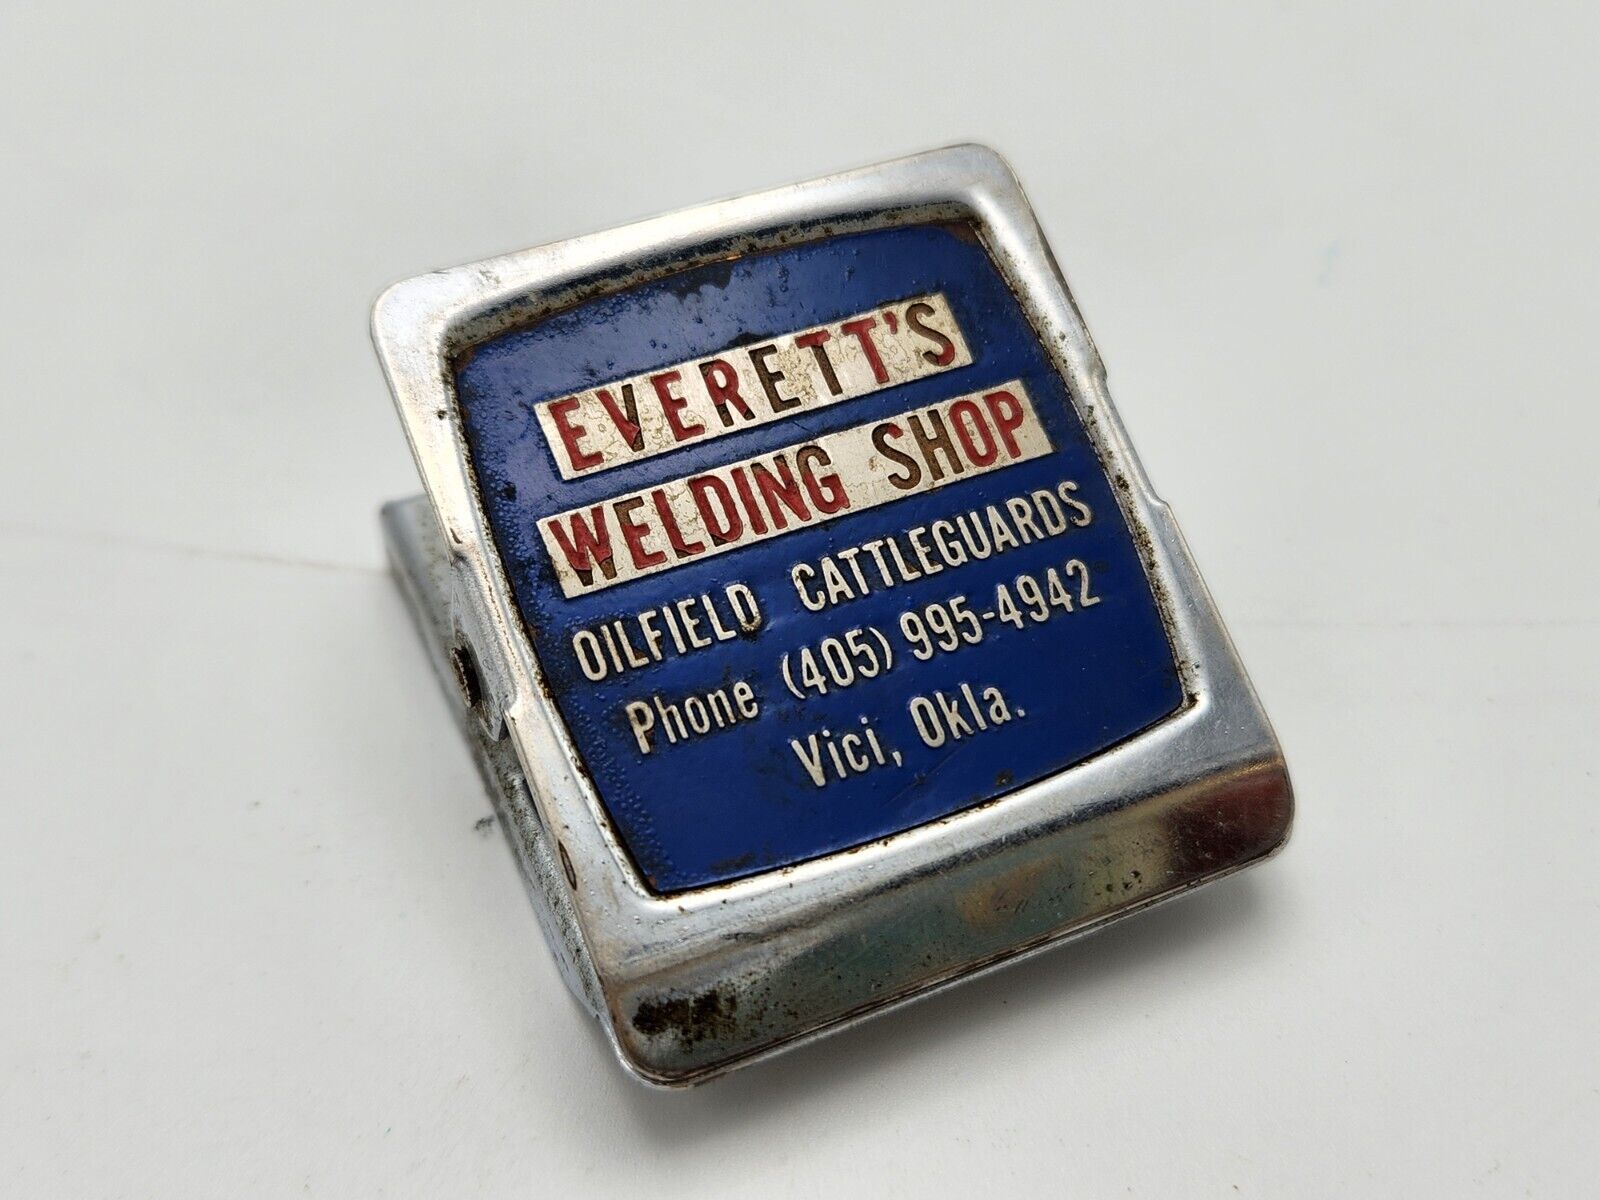 Vintage Everett's Welding Shop Vici Oklahoma Oilfield CattleGuards Magnet Clip